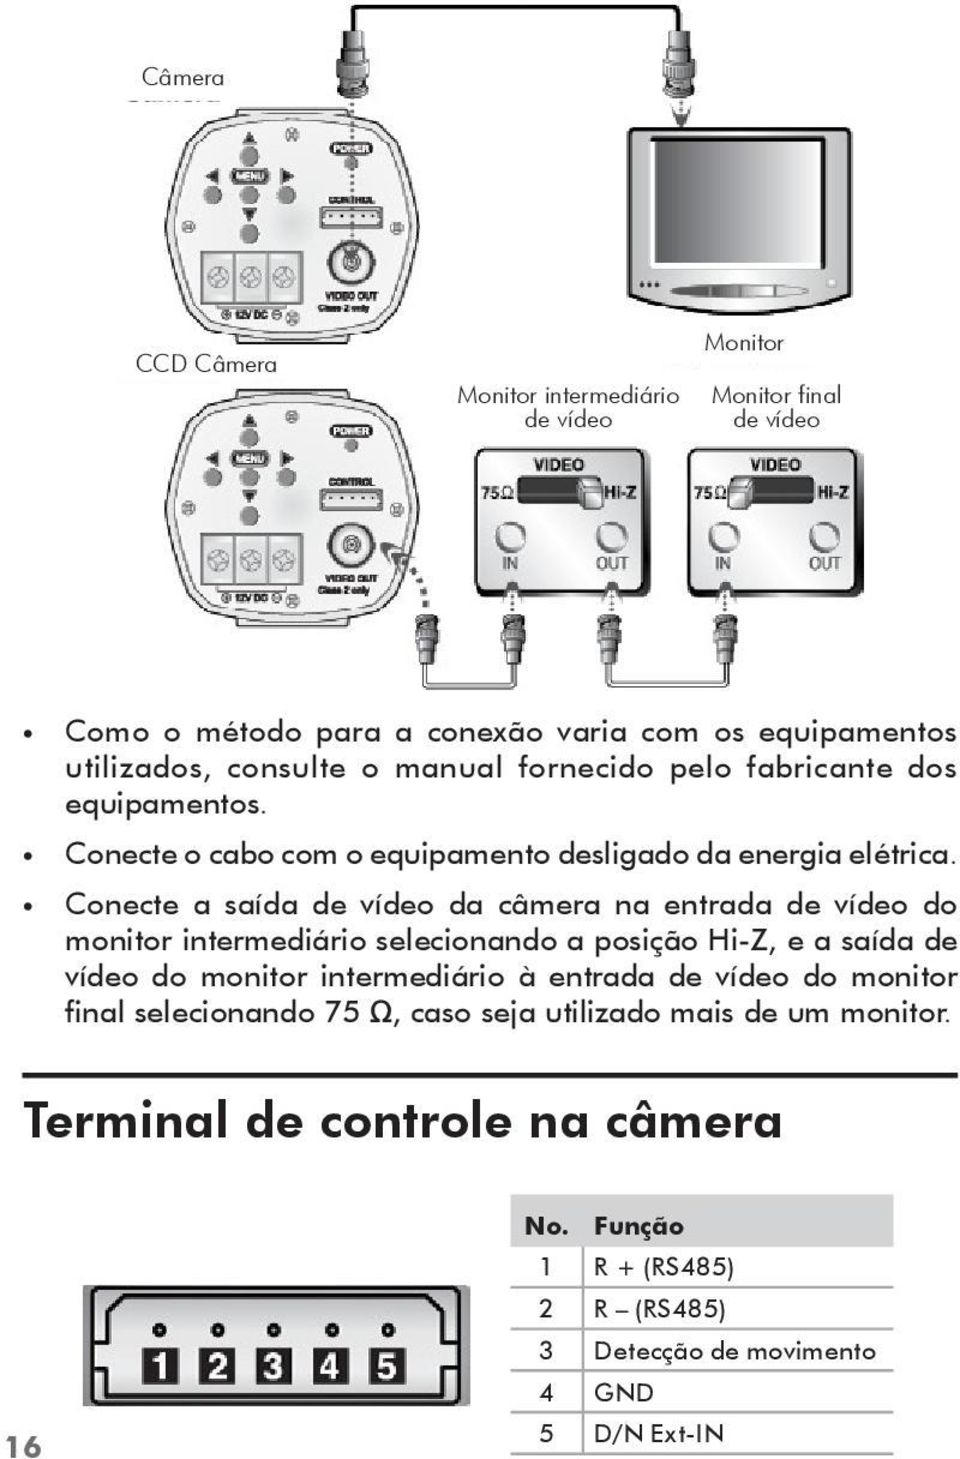 Conecte a saída de vídeo da câmera na entrada de vídeo do monitor intermediário selecionando a posição Hi-Z, e a saída de vídeo do monitor intermediário à